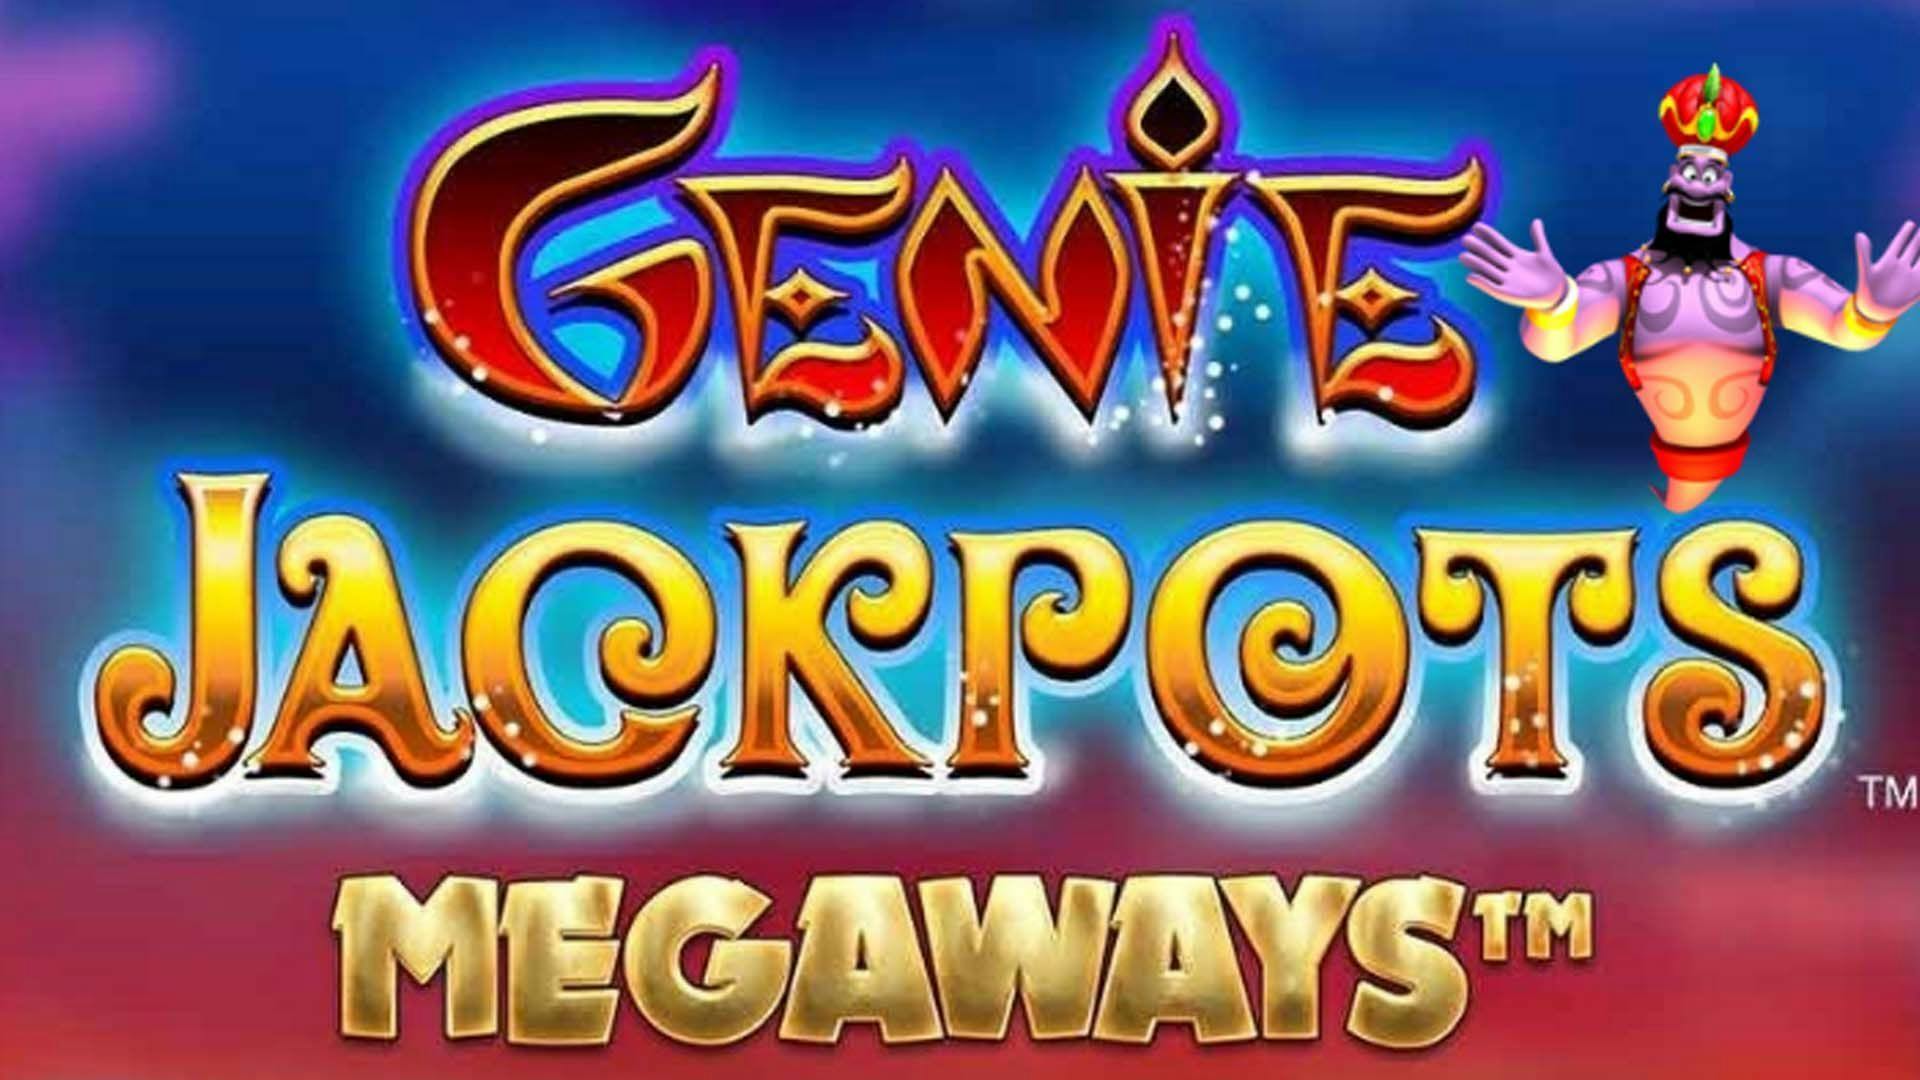 Slot Online Genie Jackpots Megaways Free Demo